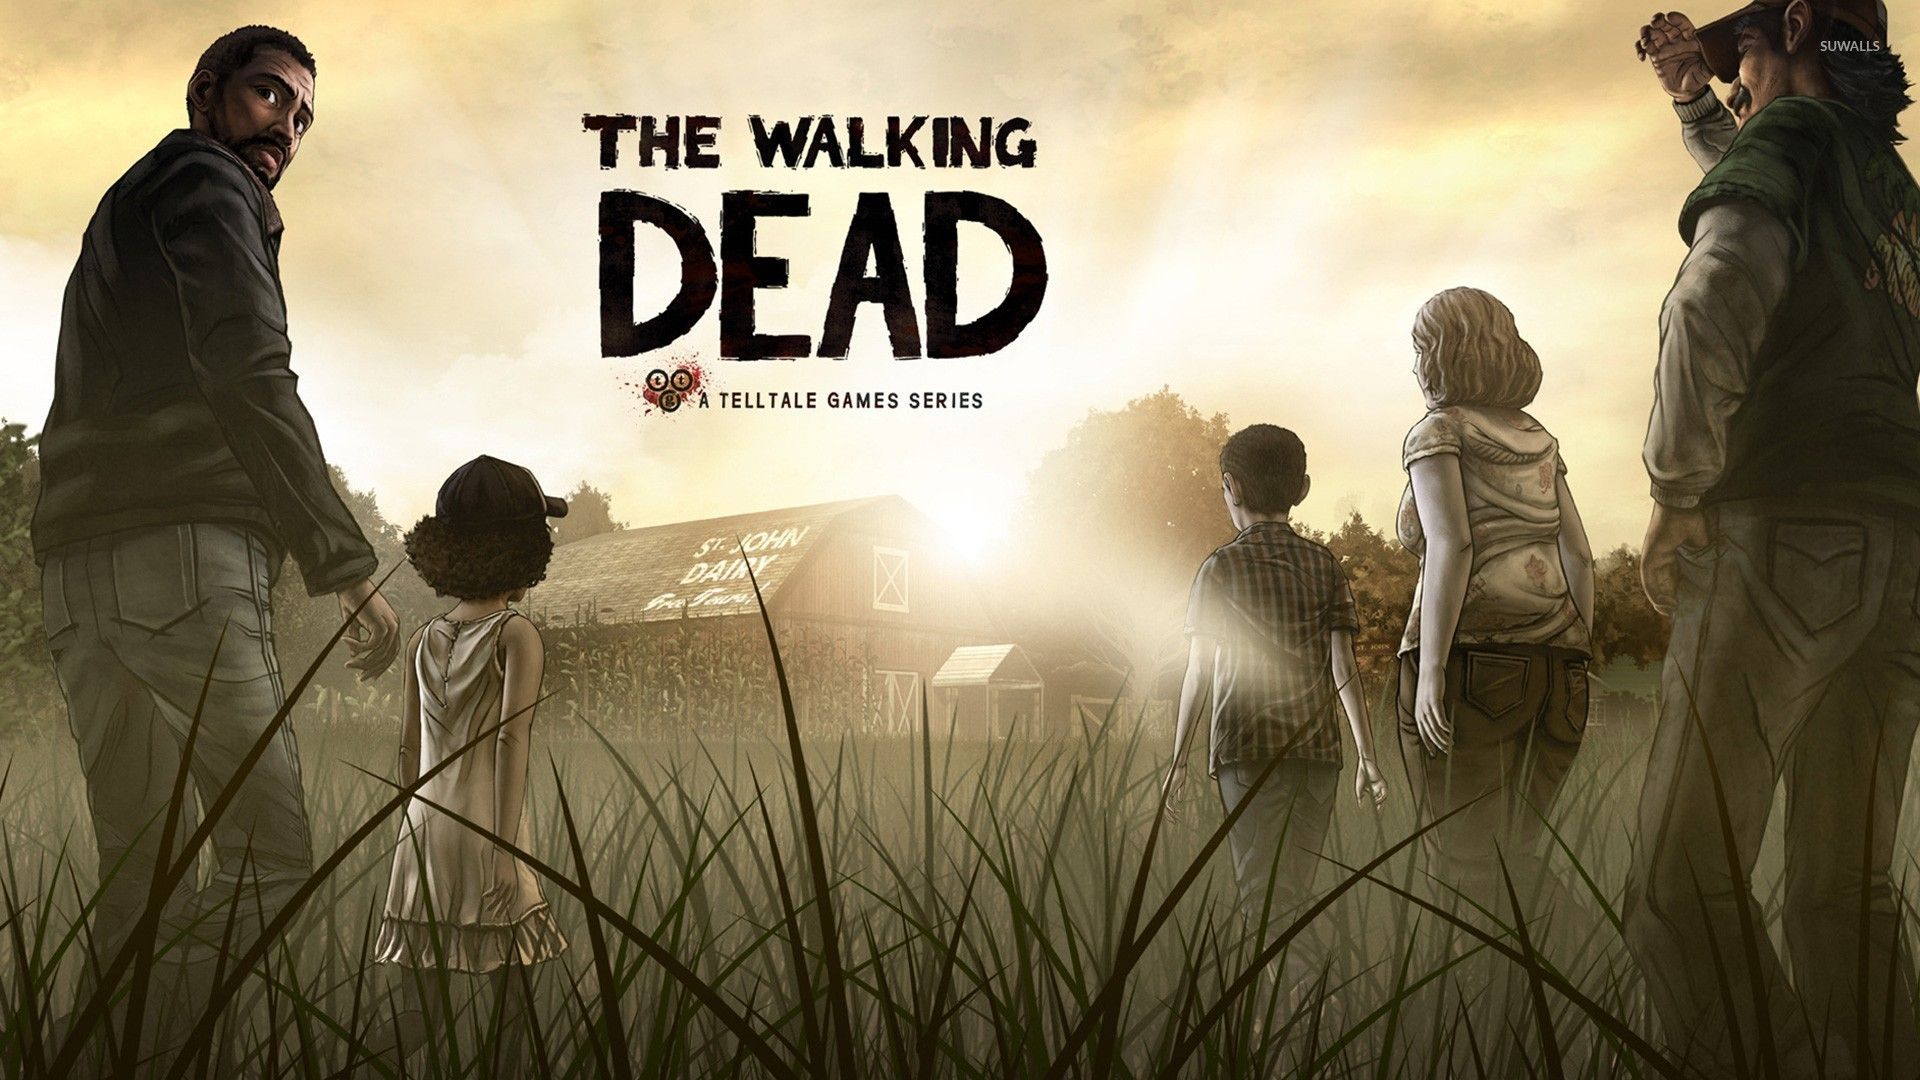 Fondo de pantalla de The Walking Dead [13] - Fondos de pantalla de juegos - # 21078